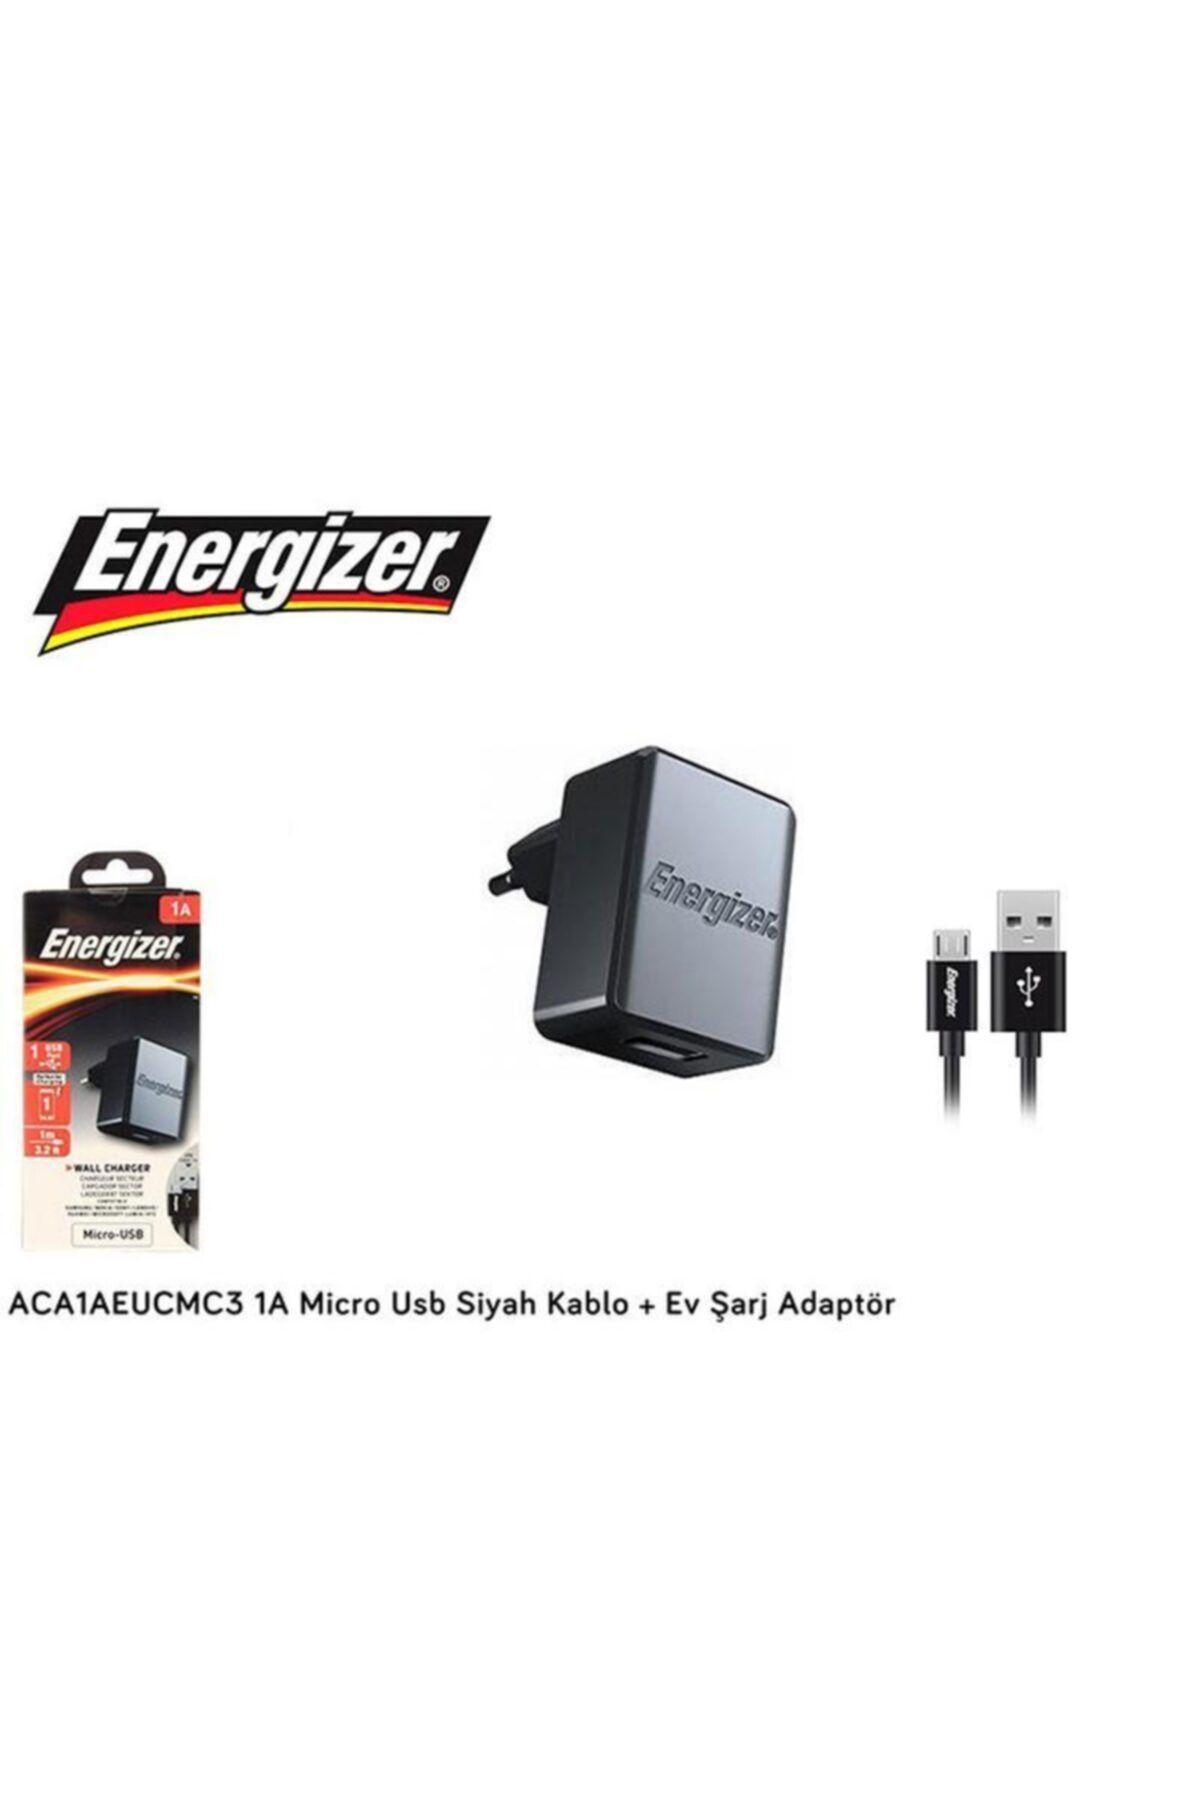 Energizer Aca1aeucmc3 1a Micro Usb Siyah Kablo + Ev Şarj Adaptör